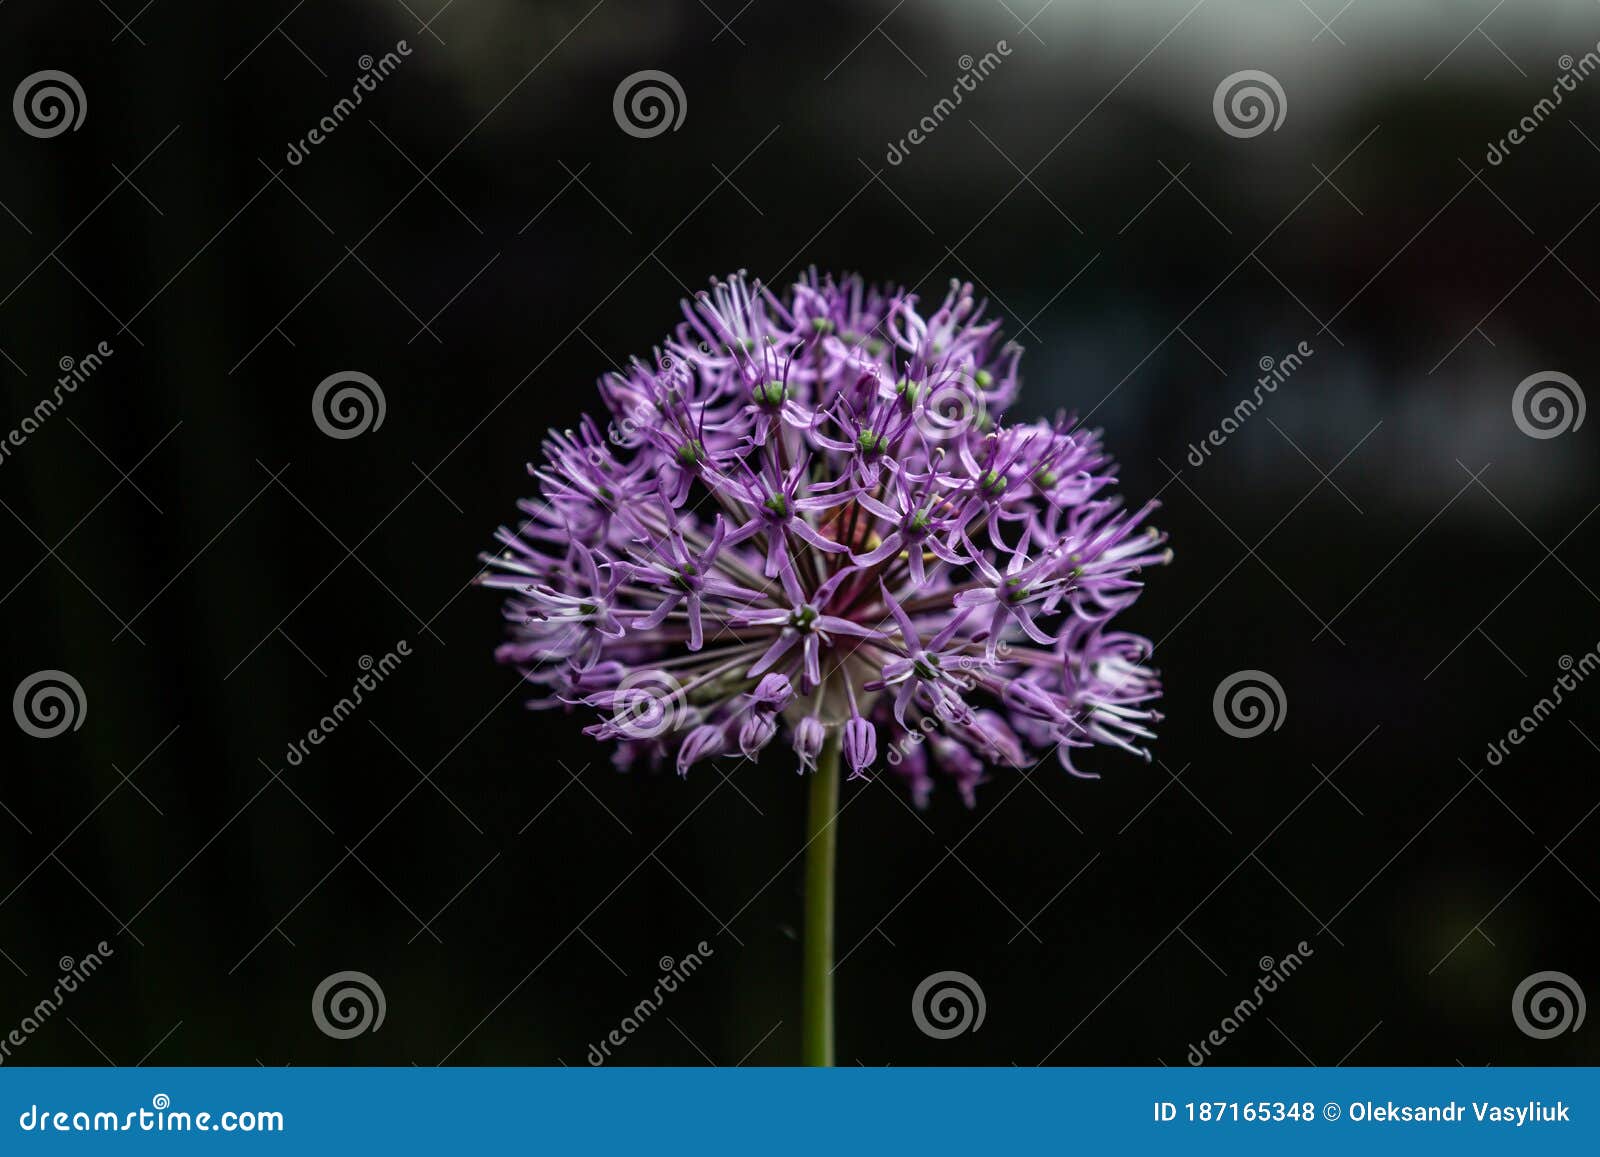 Flower Of Purple Allium Decorative Bow Closeup On A Black Background Horizontal Orientation Stock Photo Image Of Allium Nature 187165348